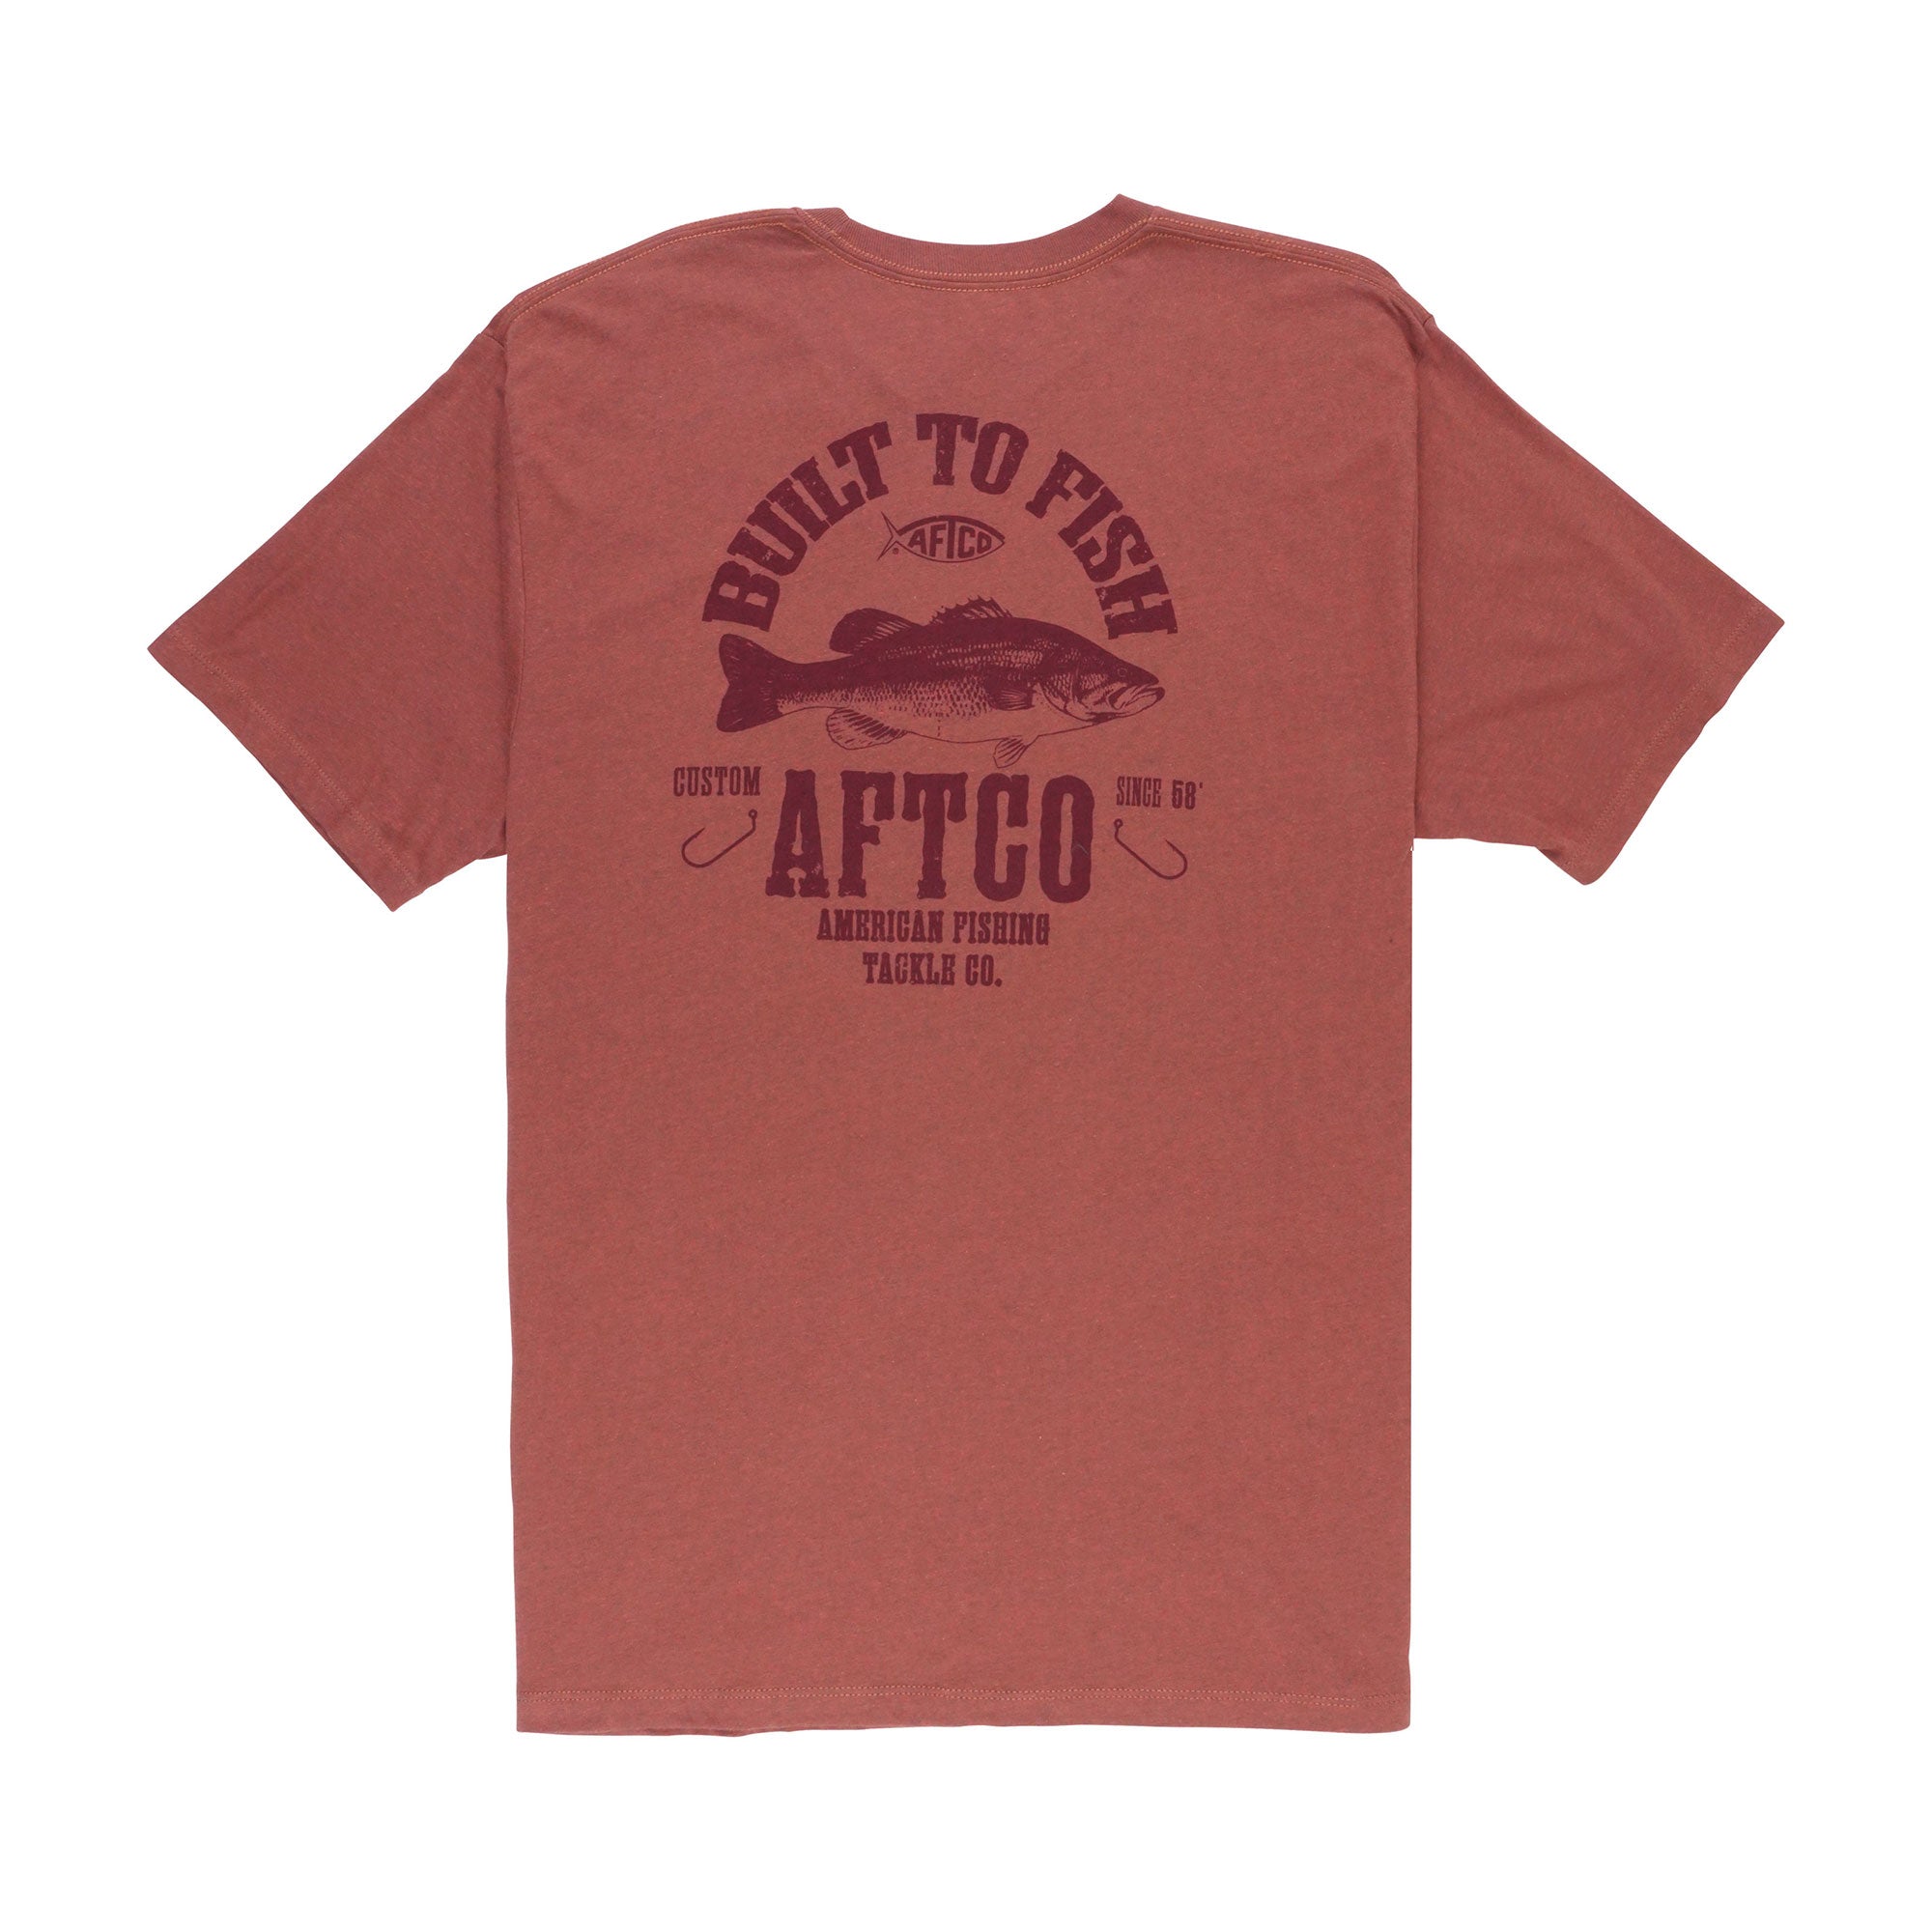 Men's Personalized Fishing T Shirt Salmon Fishing Shirts Custom T Shirt Salmon Fishing Shirt Vintage Tee